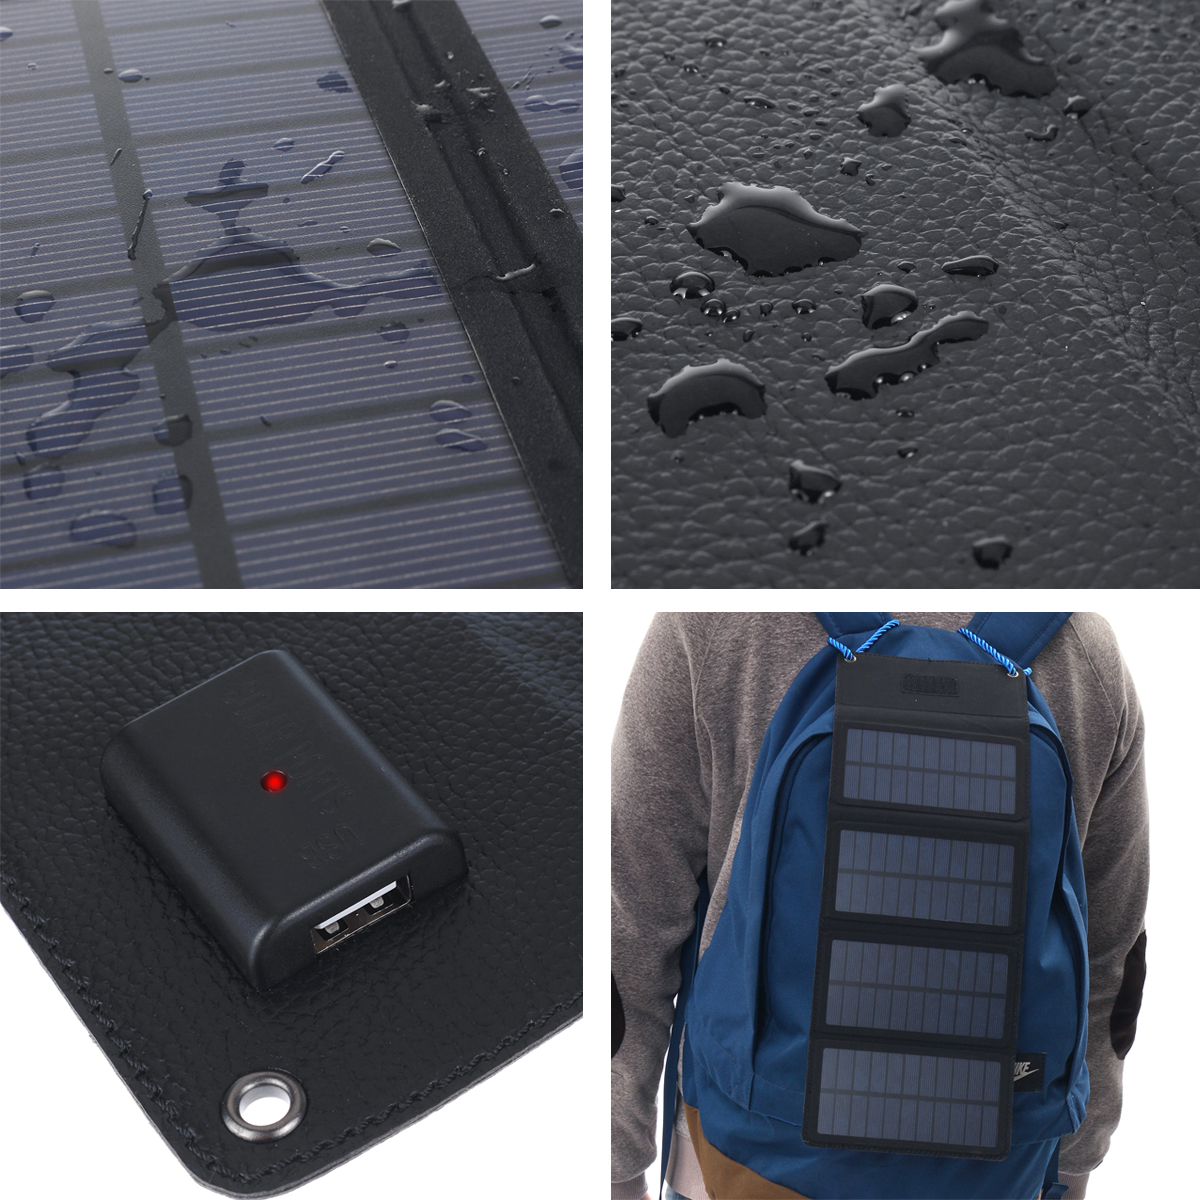 7W 5V Waterproof Foldable Mono-crystalline Silicon Solar Panel With LED Charging indicator & USB Interface 19